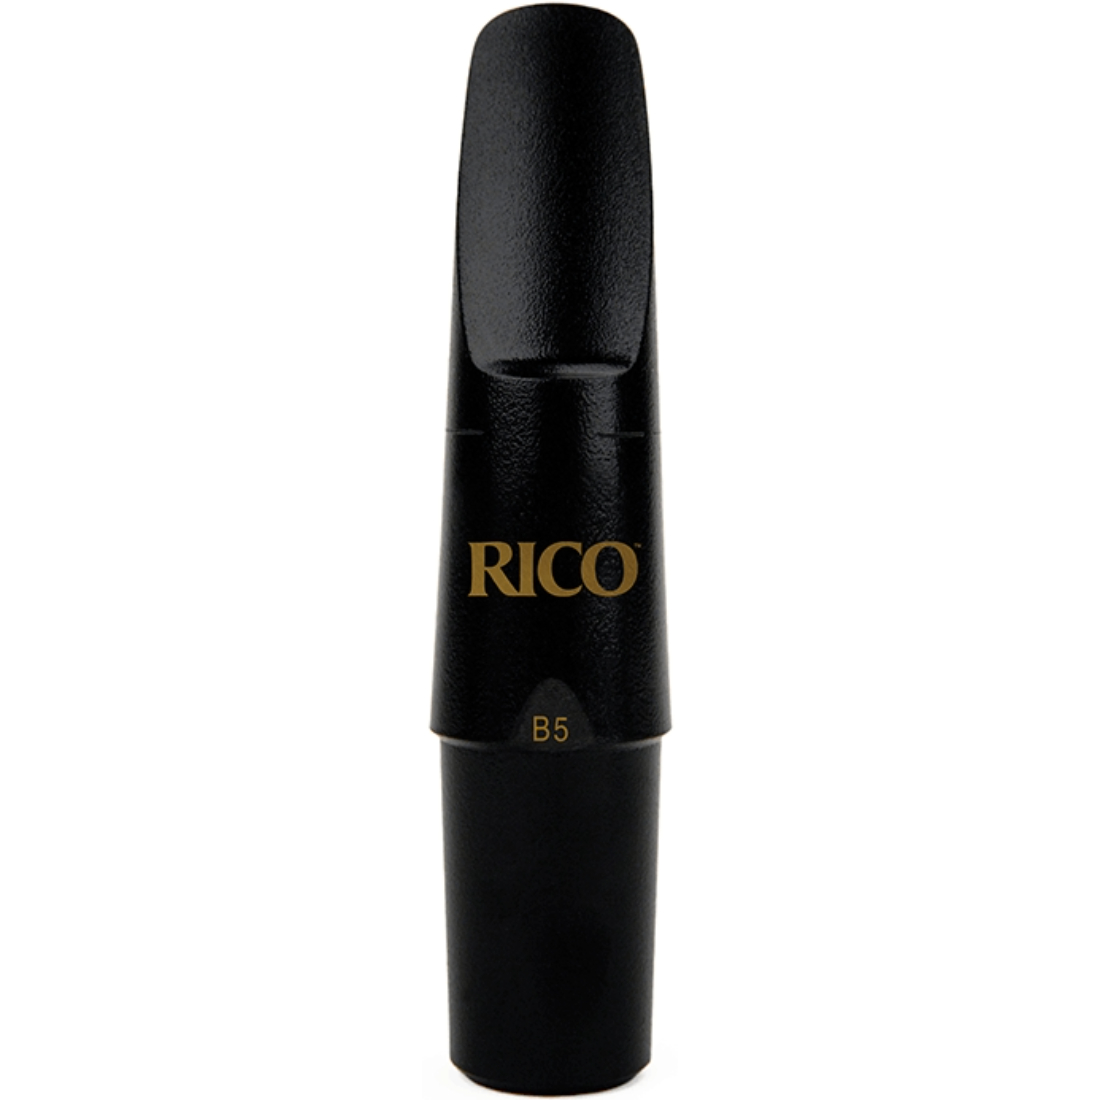 Black RICO baritone saxophone mouthpiece